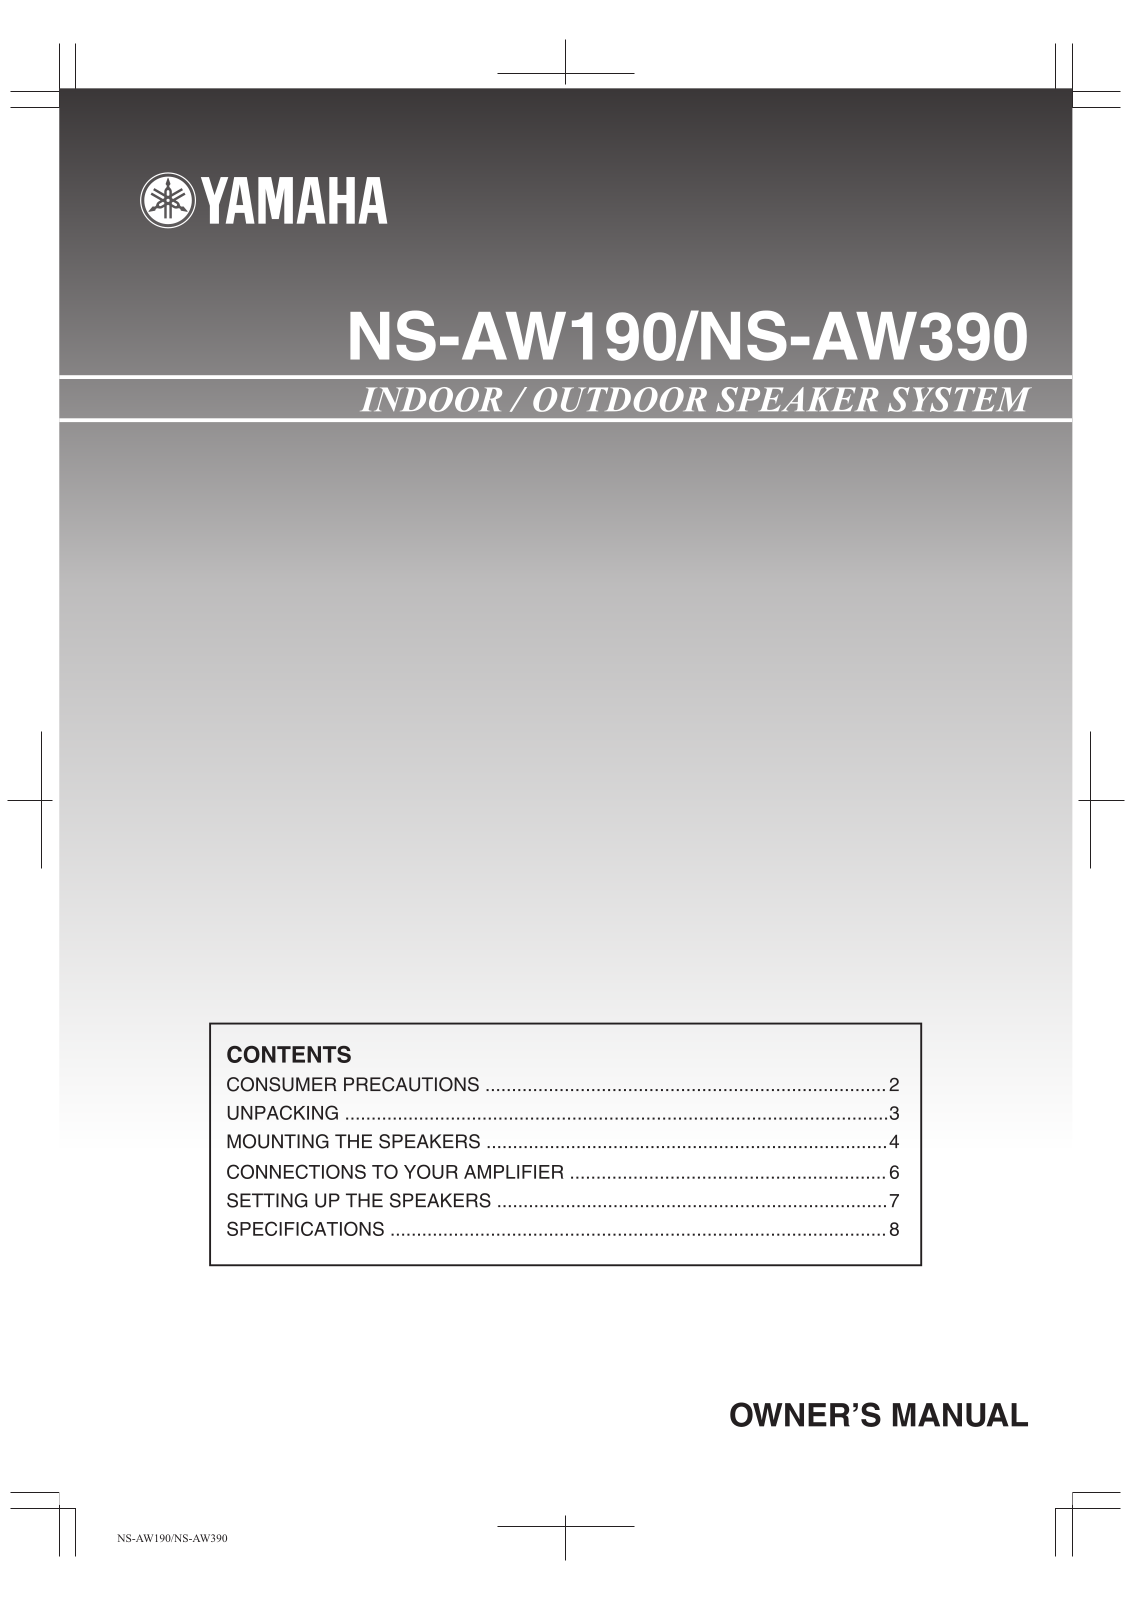 Yamaha NS-AW190, NS-AW390 Owners Manual